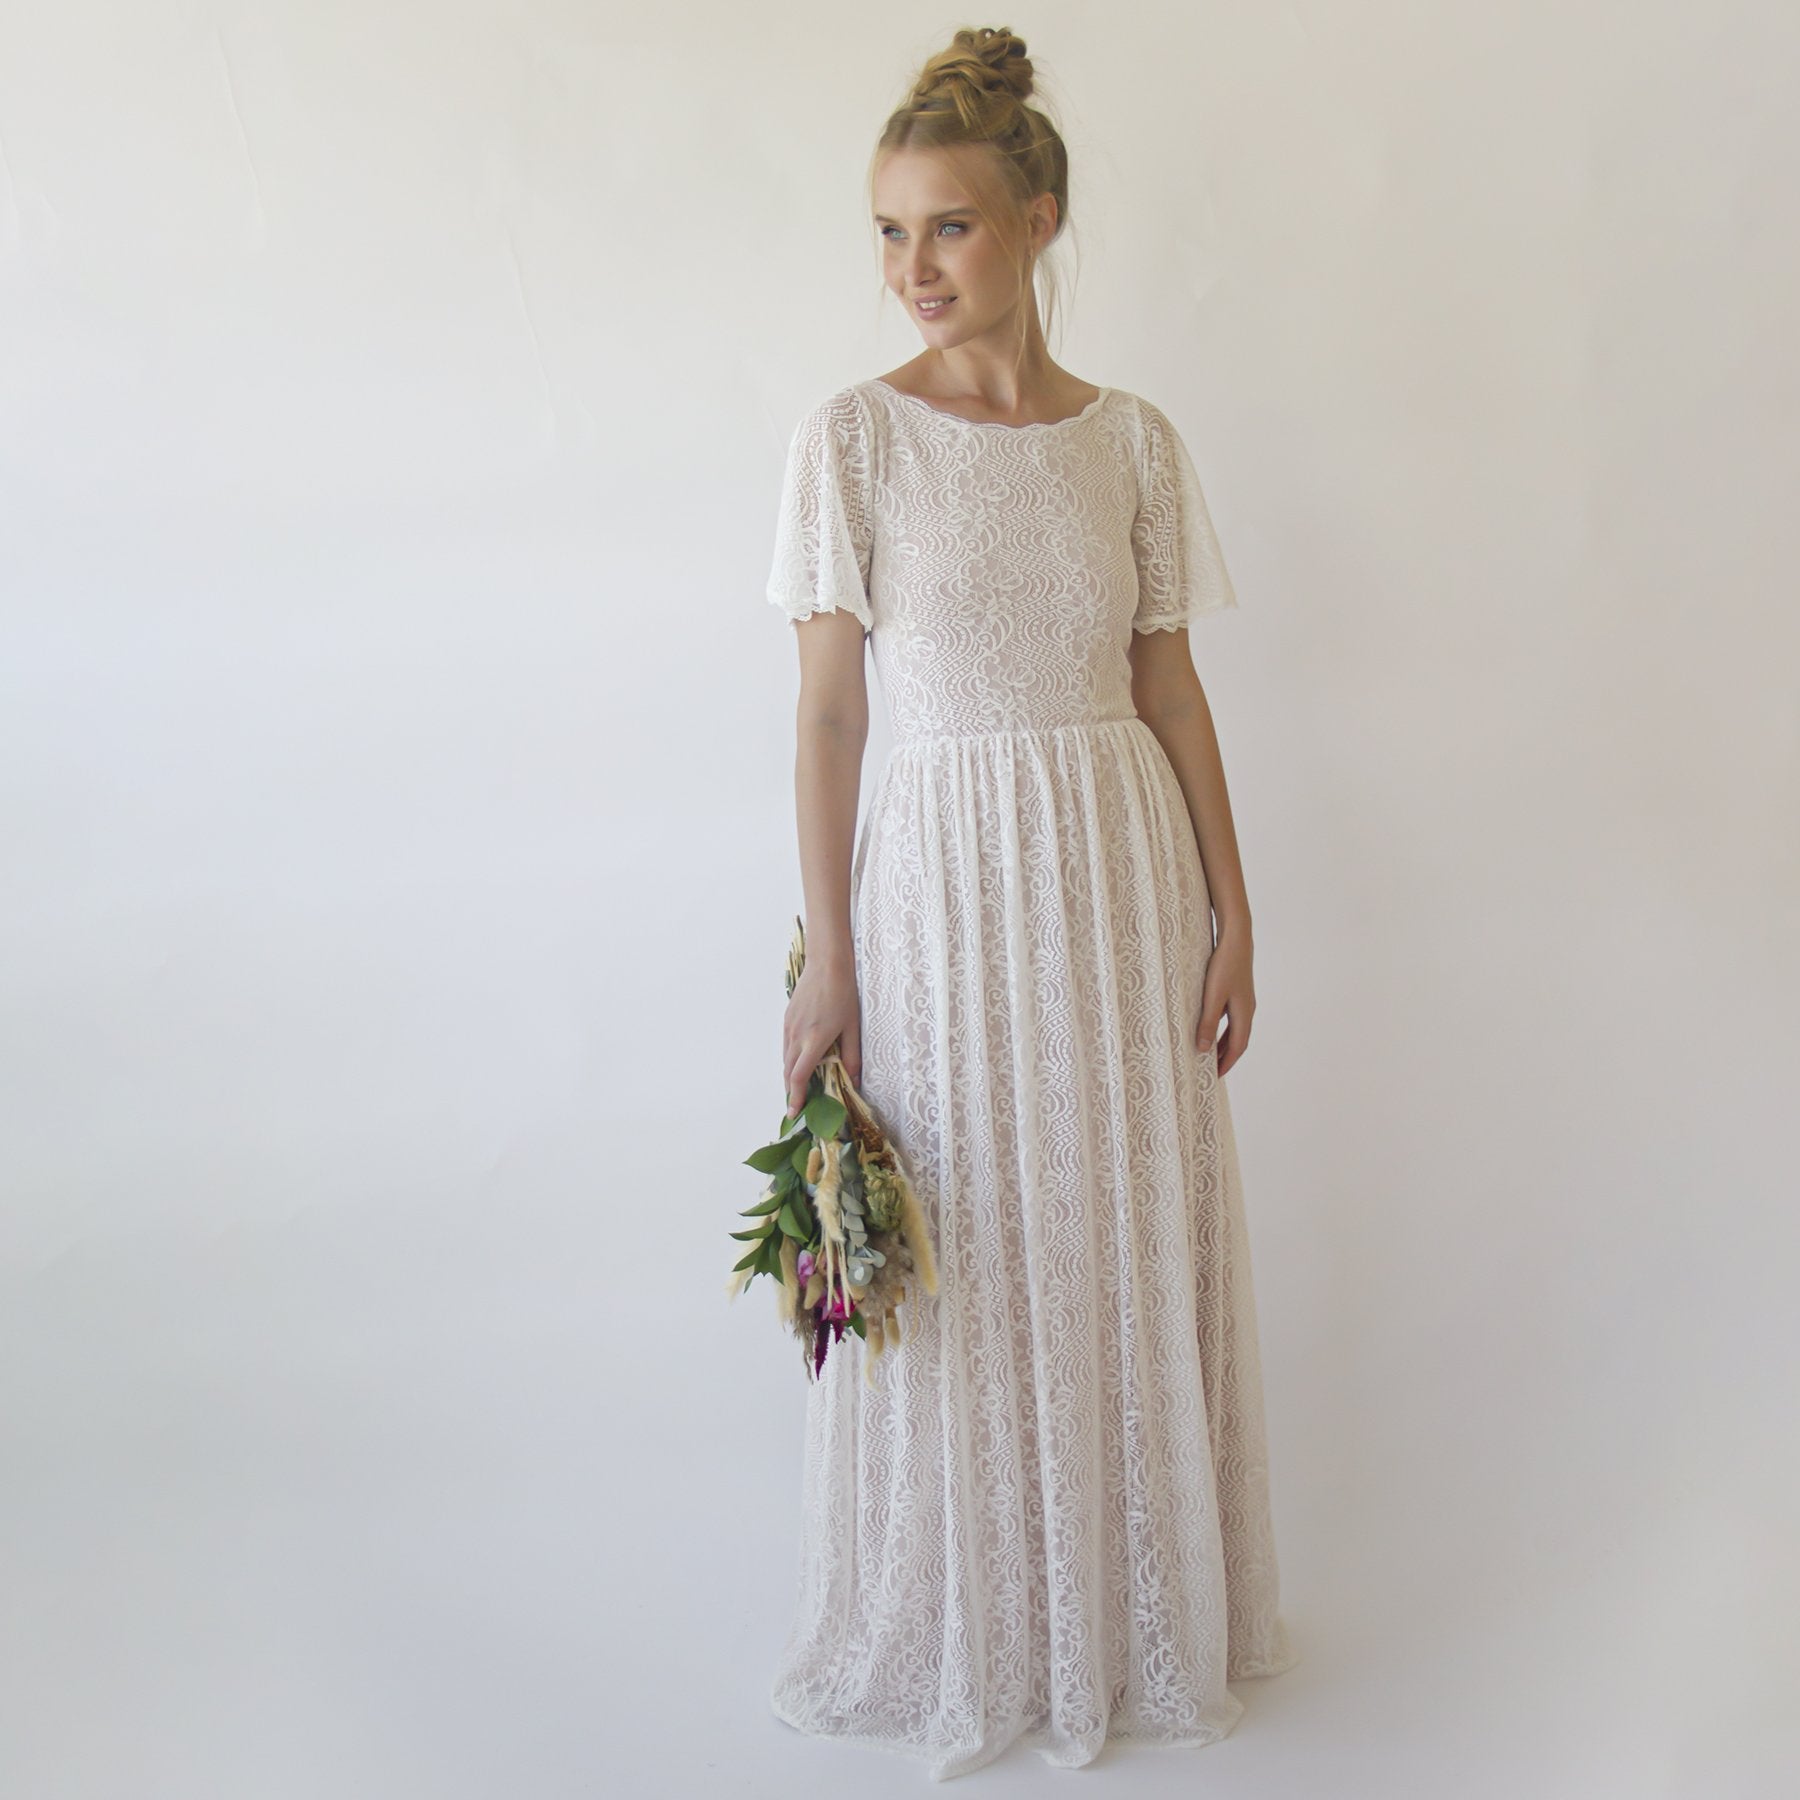 Vintage Lace Wedding Dress, Short Sleeves Modest Pearly wedding dress